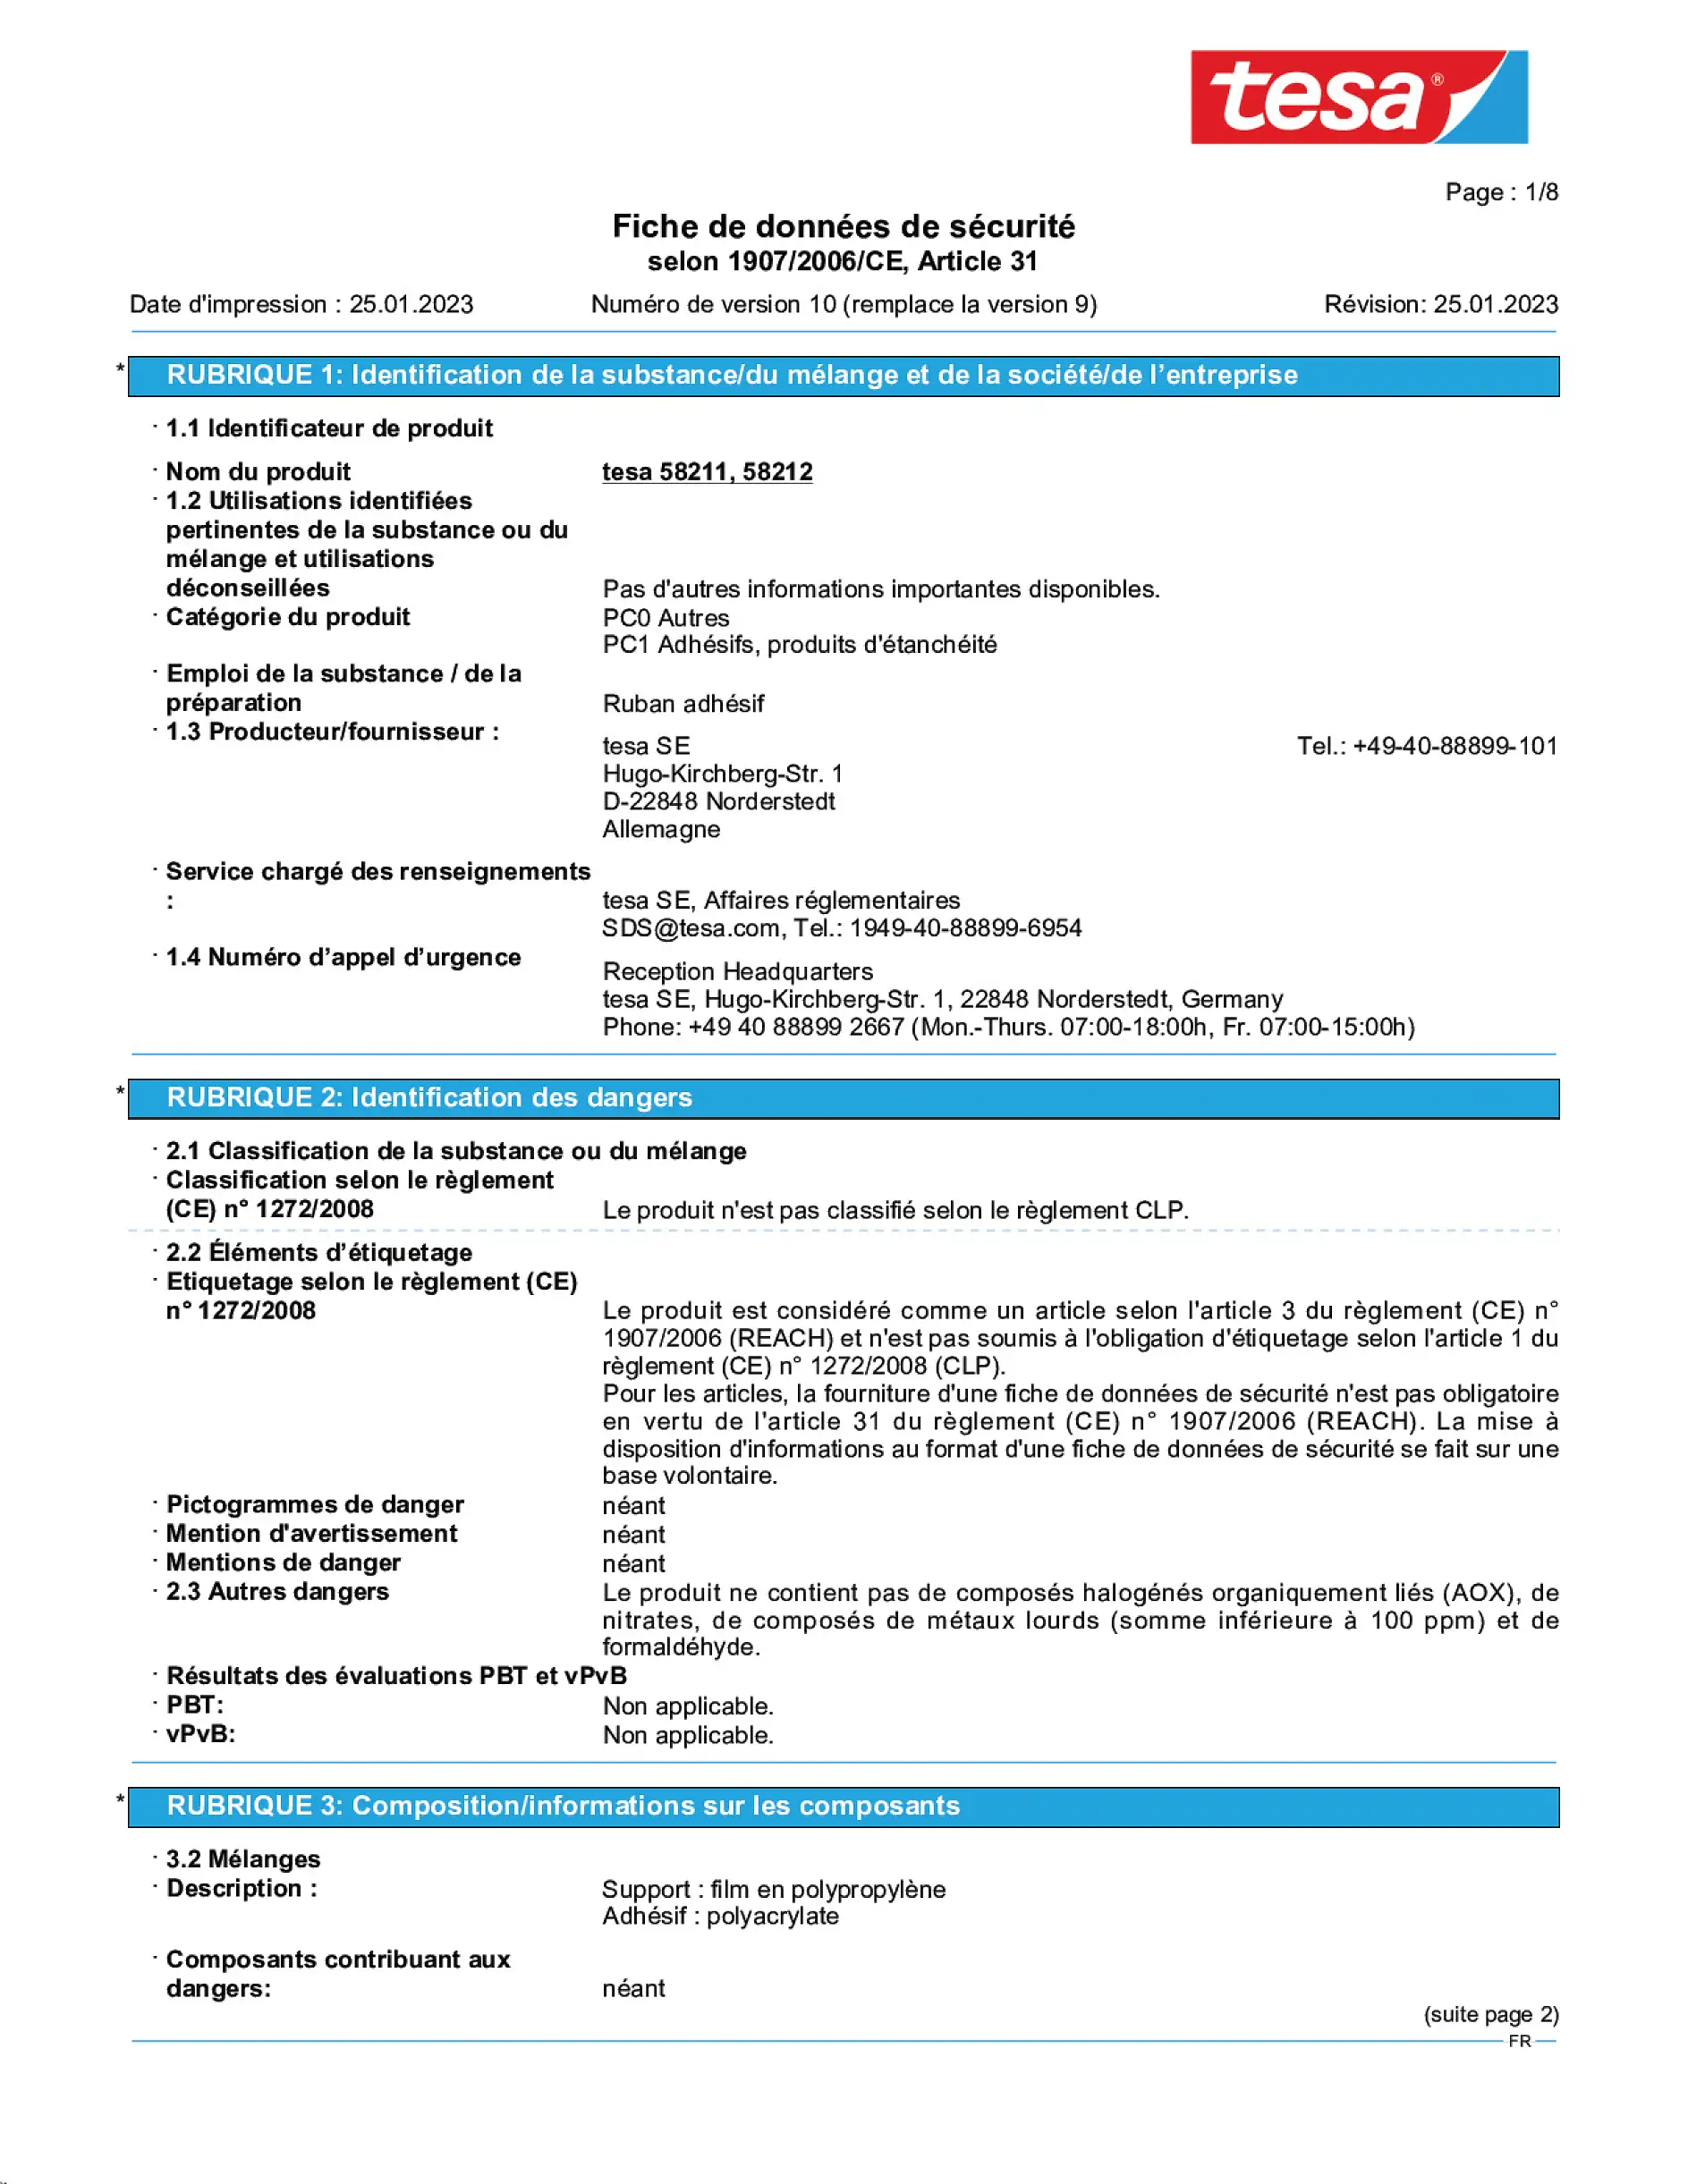 Safety data sheet_tesapack® 57424_fr-FR_v10